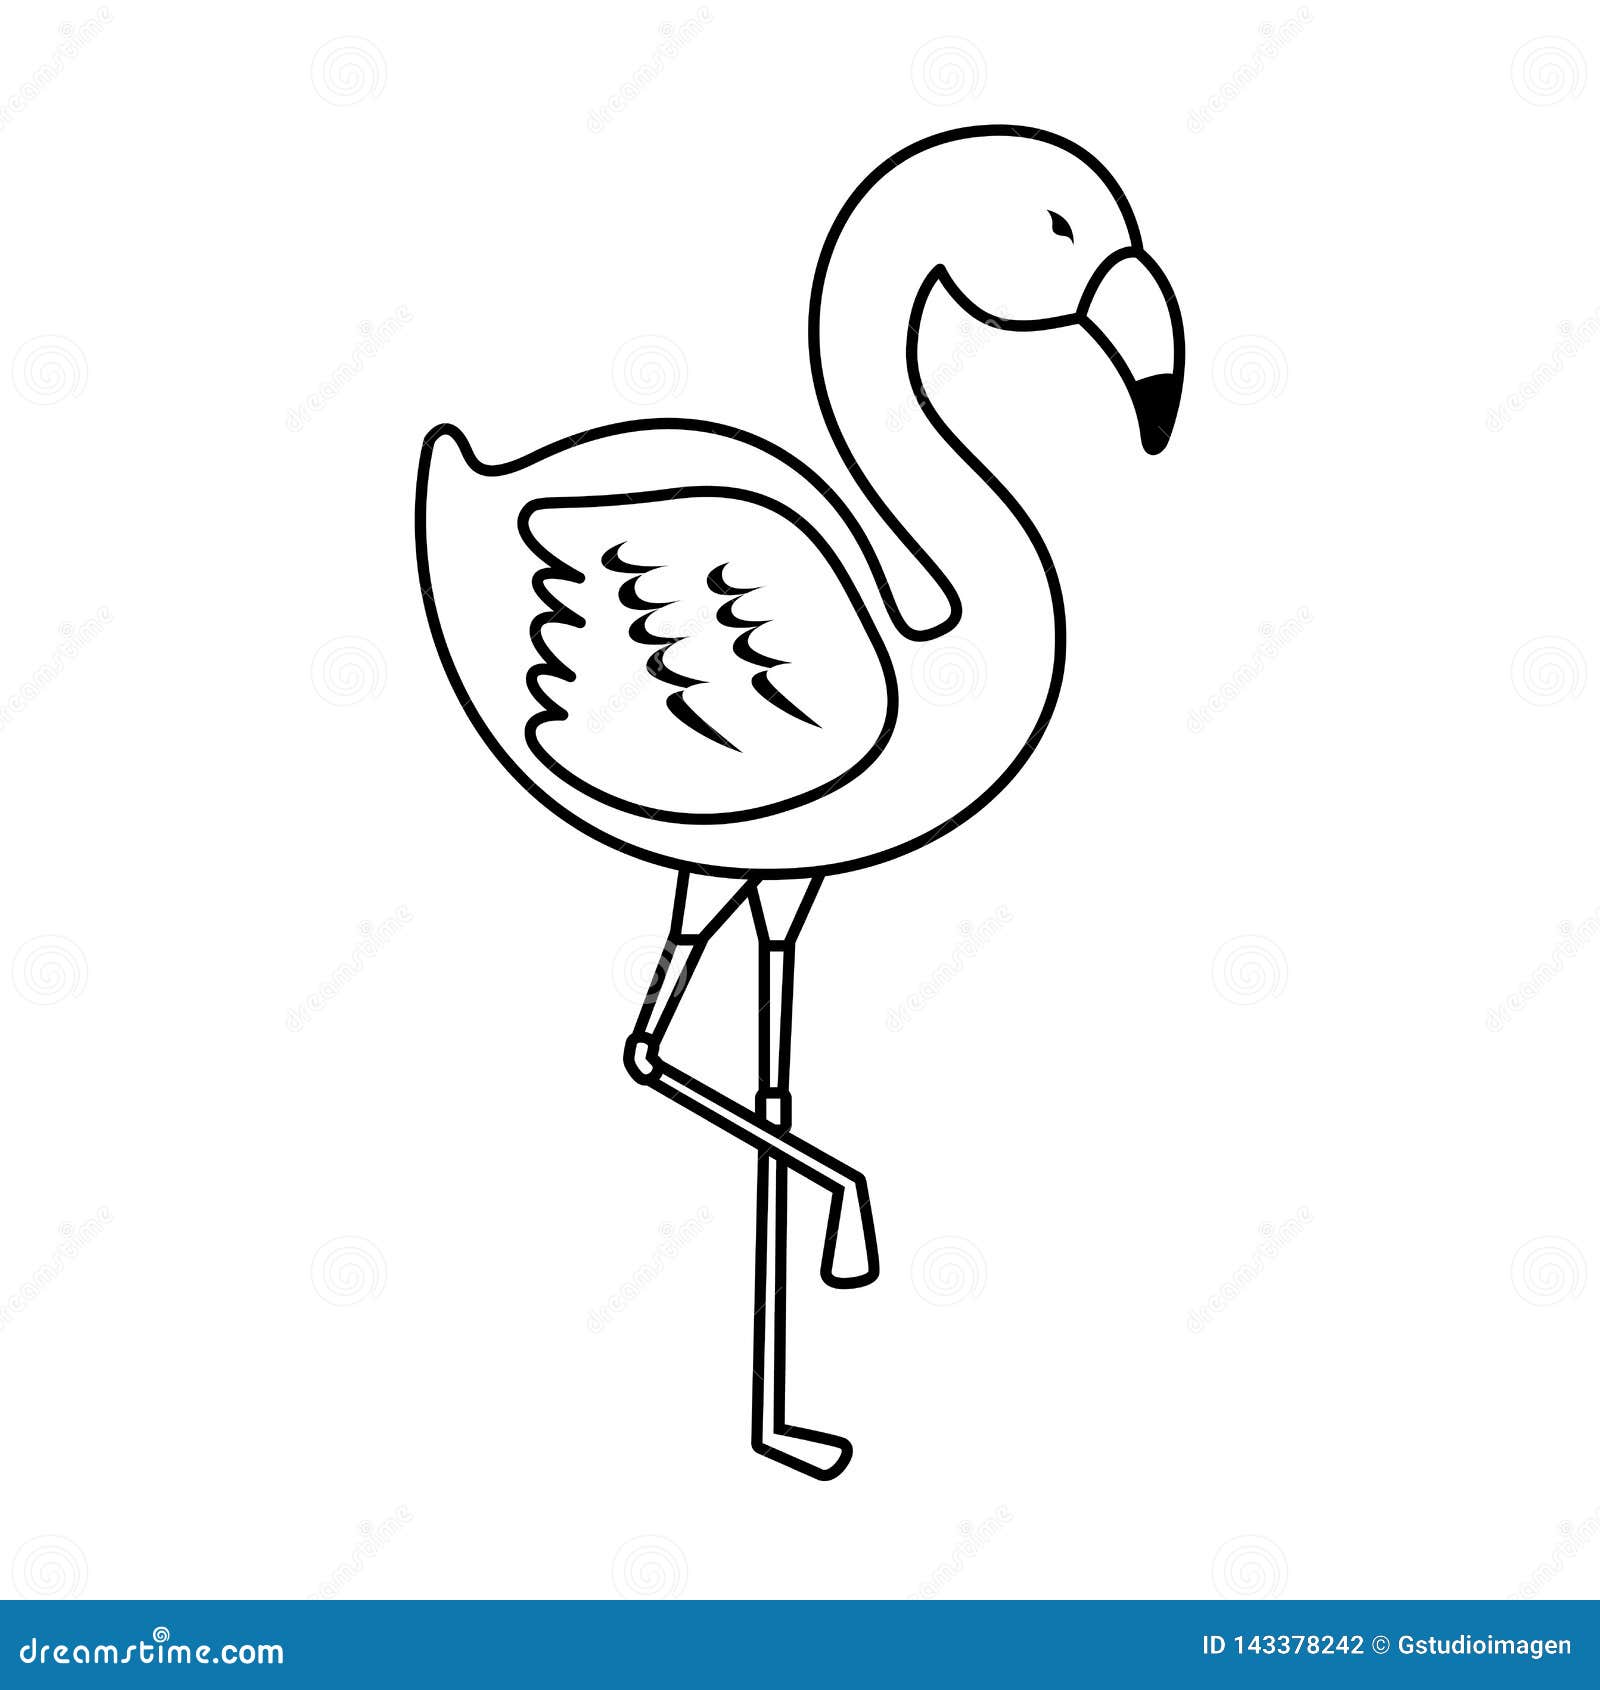 Elegant flamingo bird icon stock vector. Illustration of decorative ...